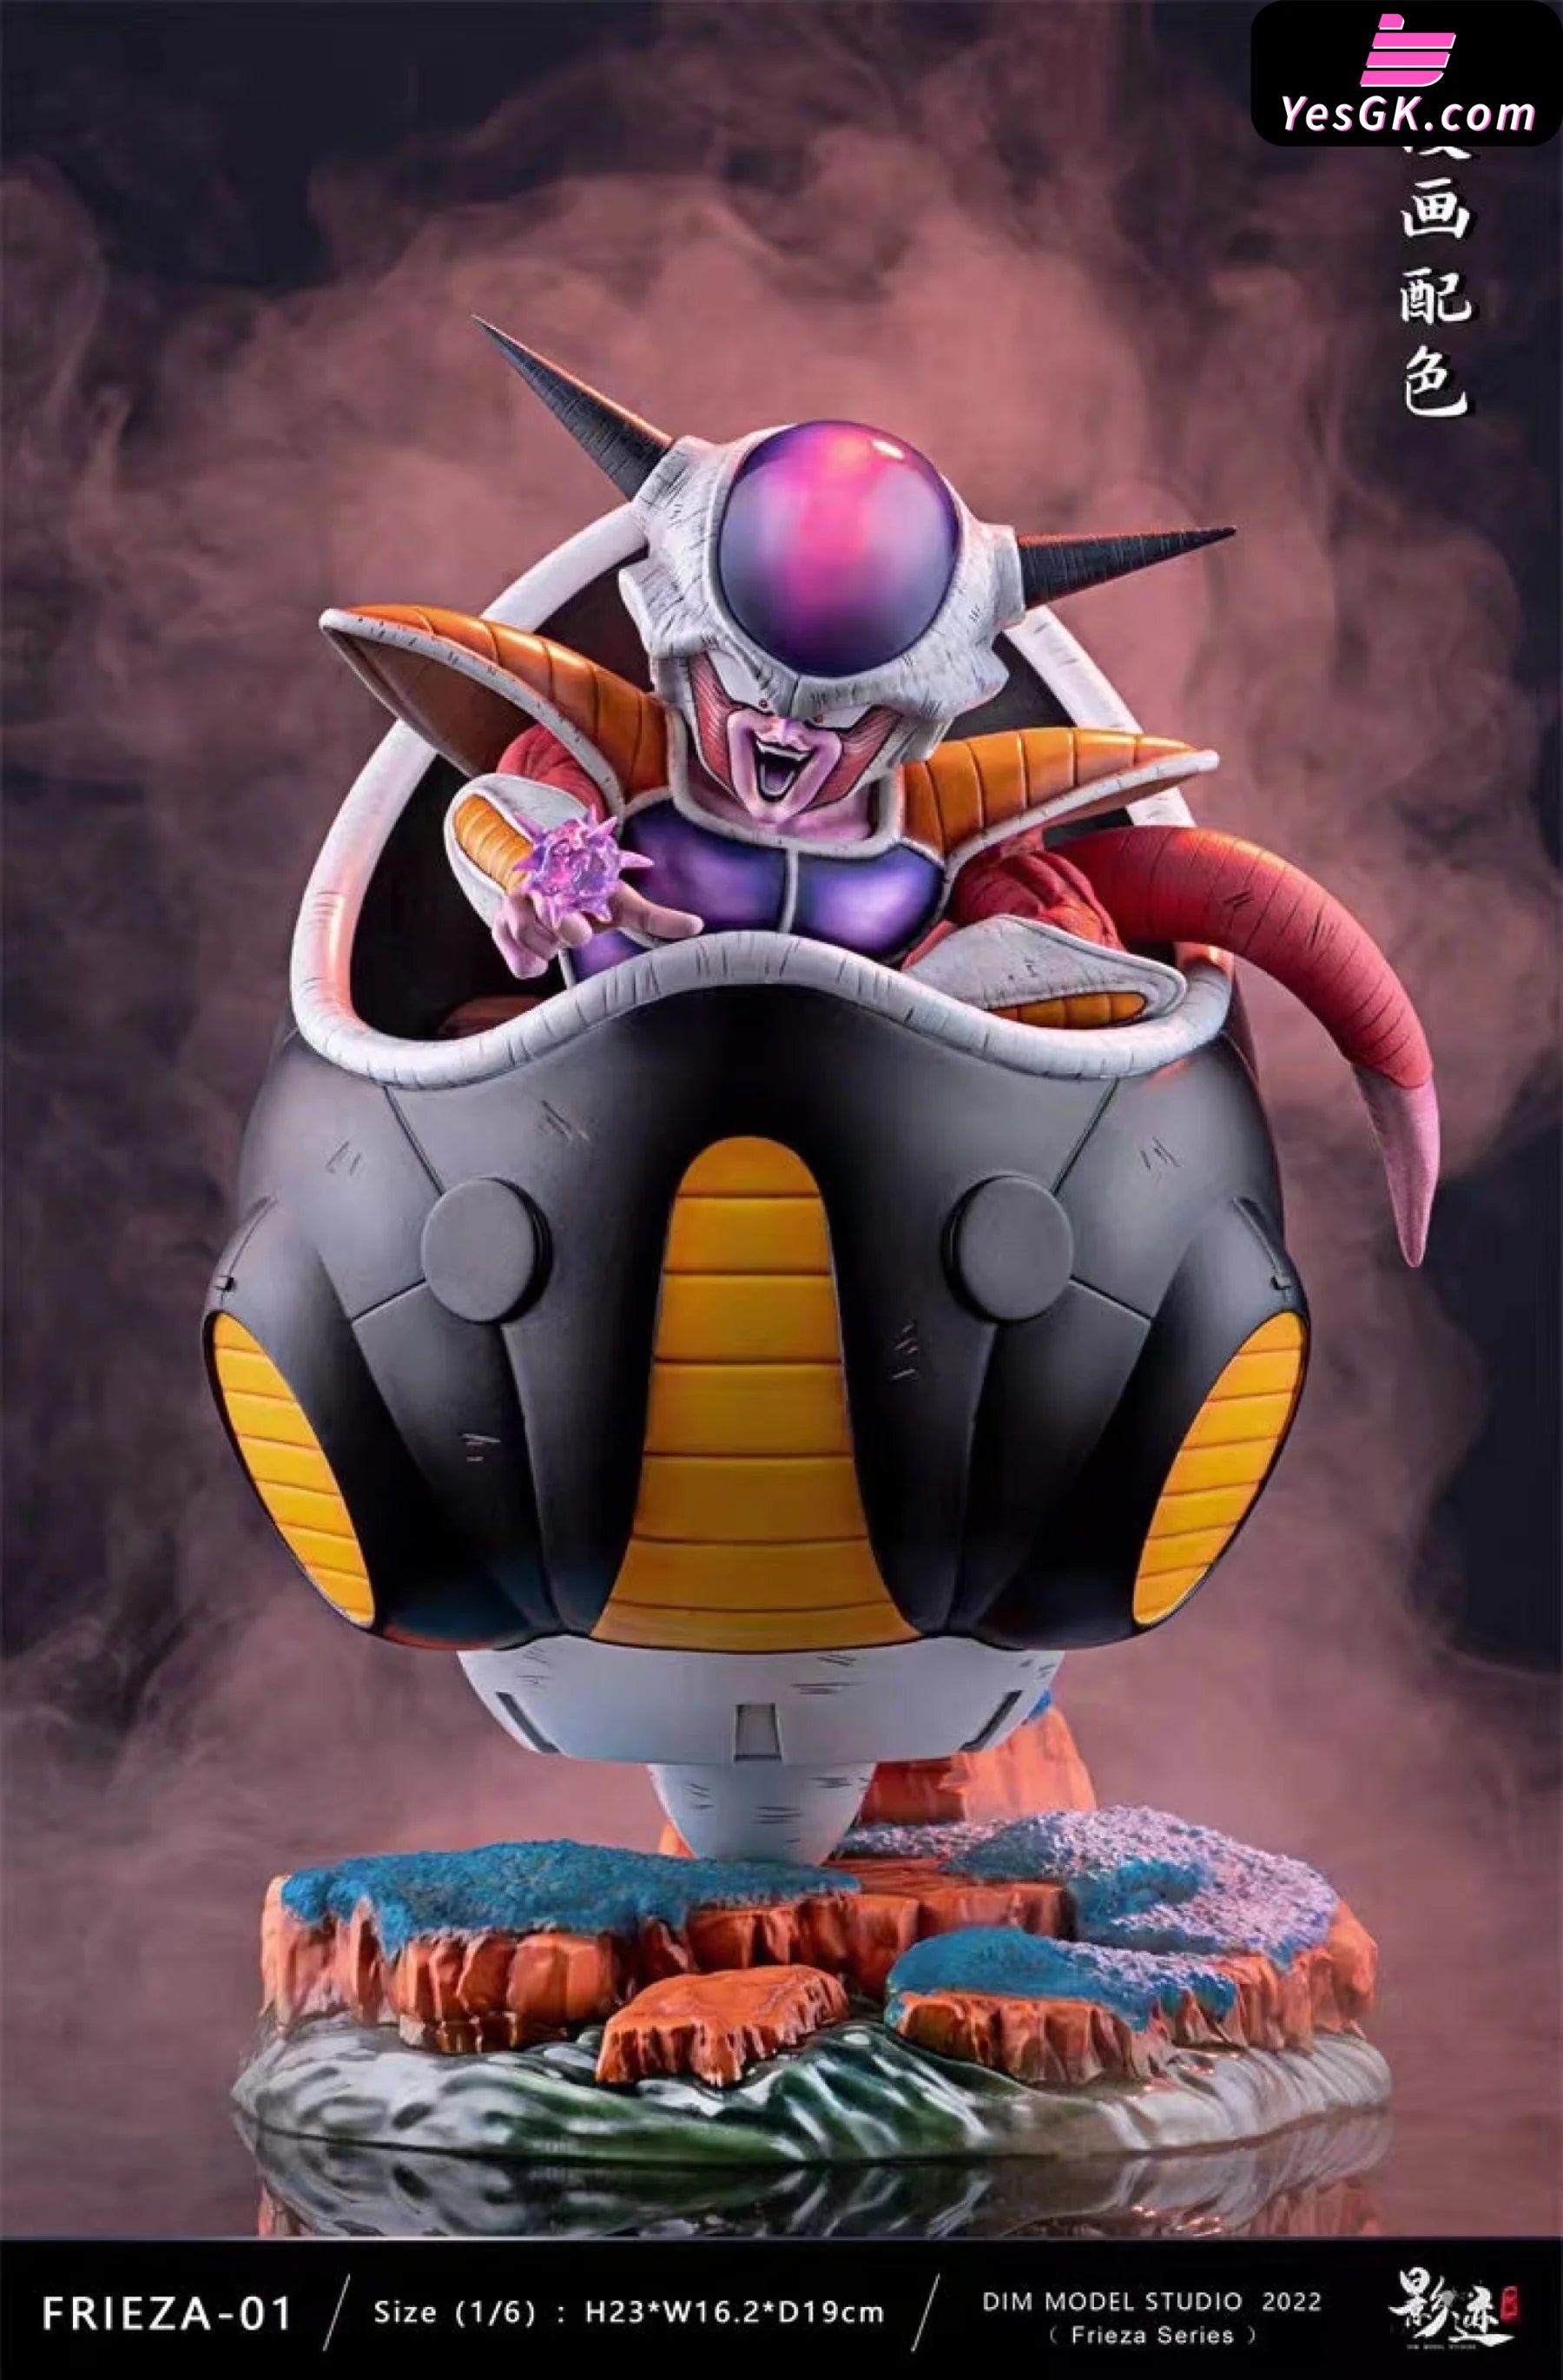 Dragon Ball Frieza Form Series-First Statue - Dim Model Studio [In-Stock]